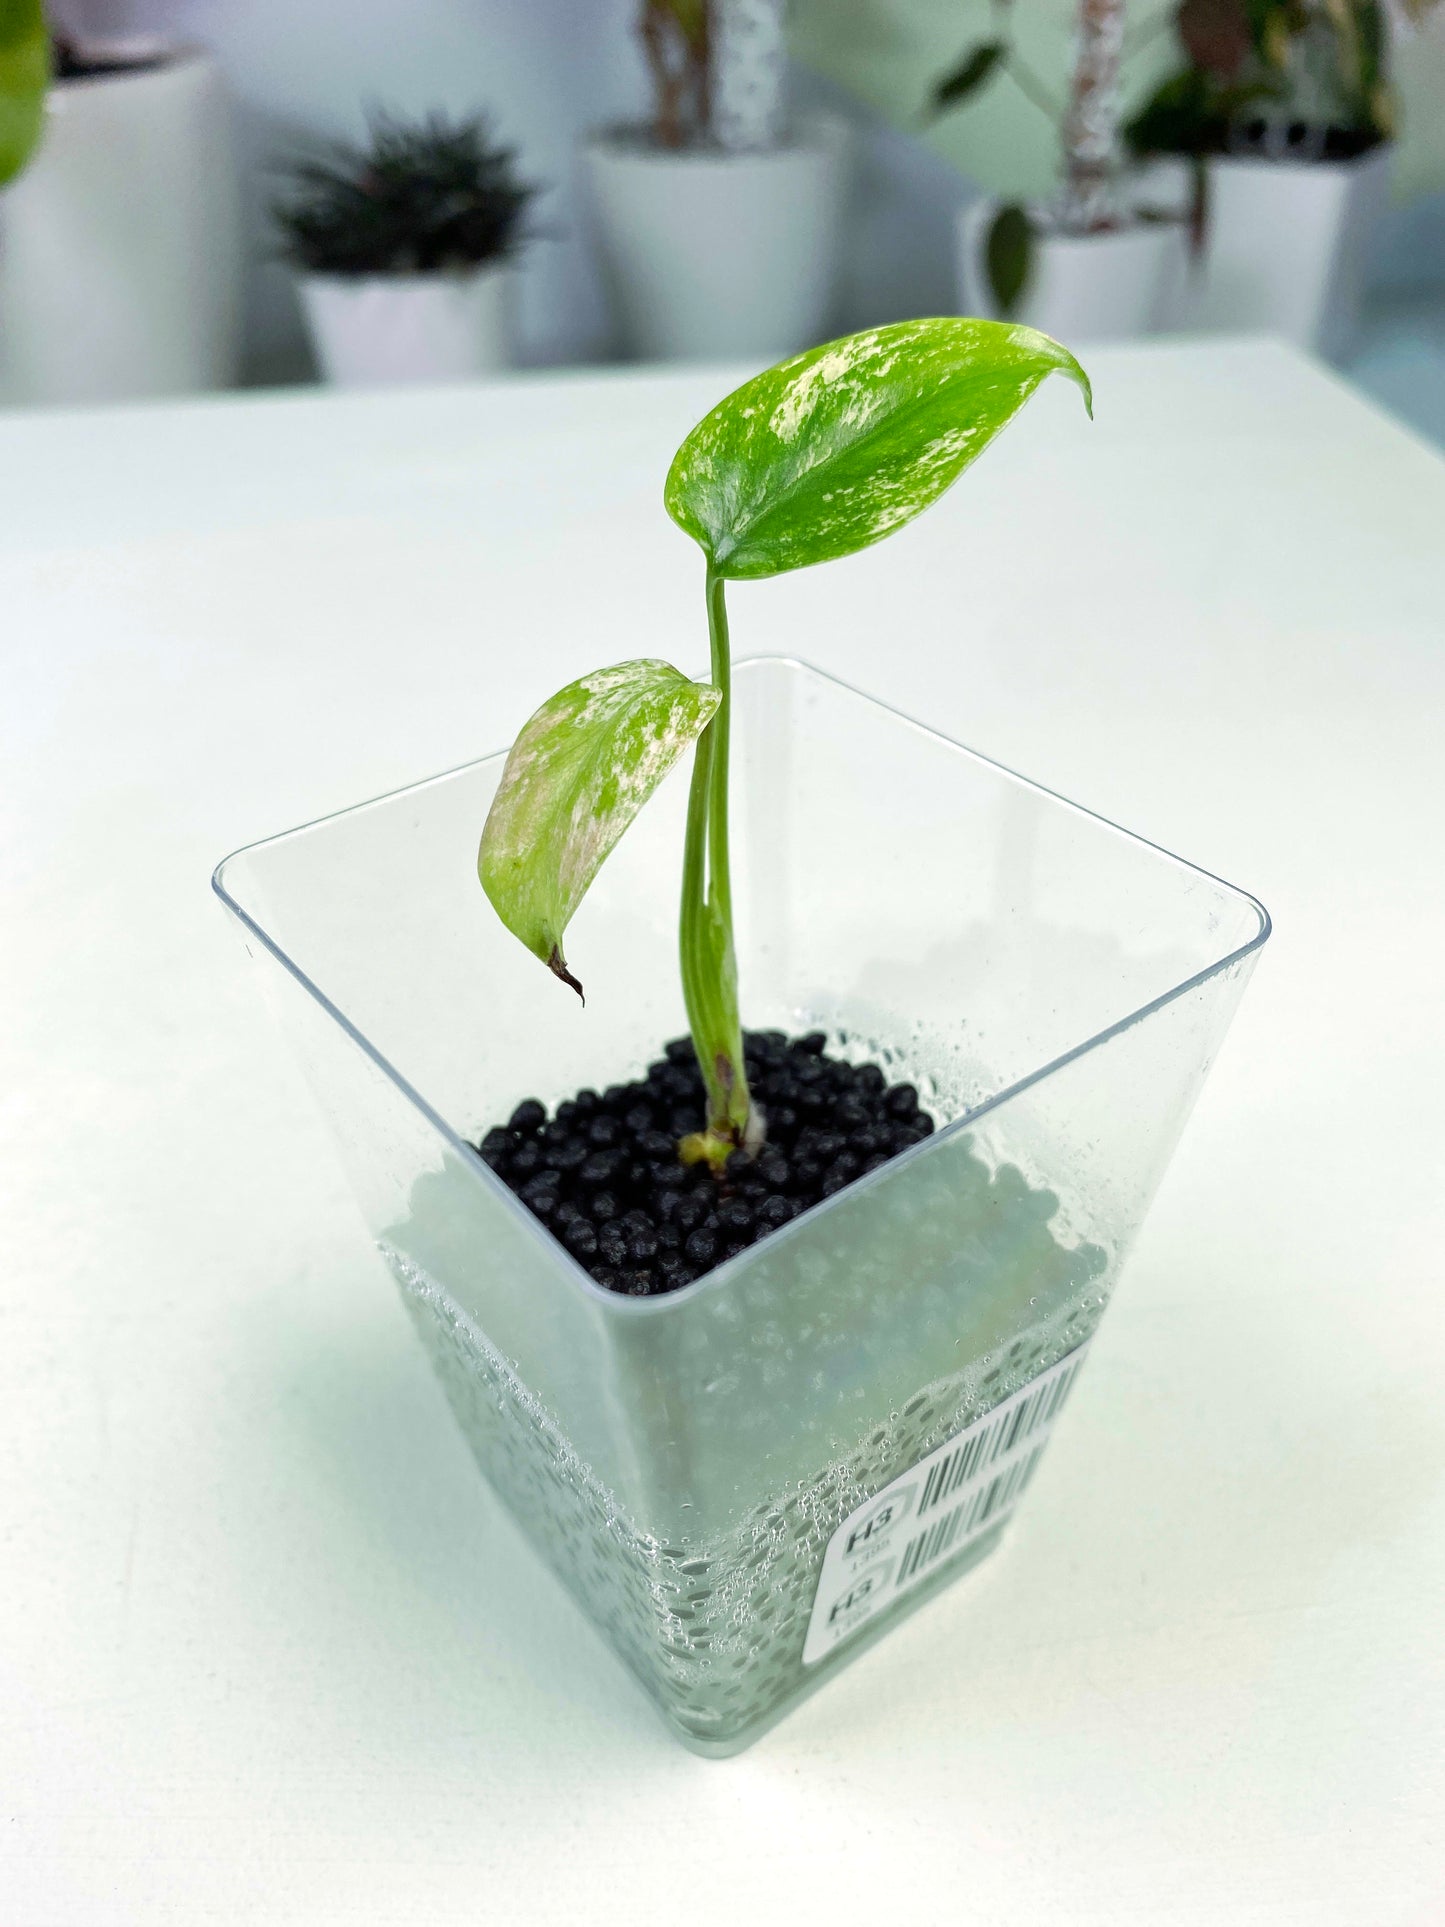 Monstera deliciosa "Mint" variegated (3:H3) [1395] | Rare Aroid | Exact Plant